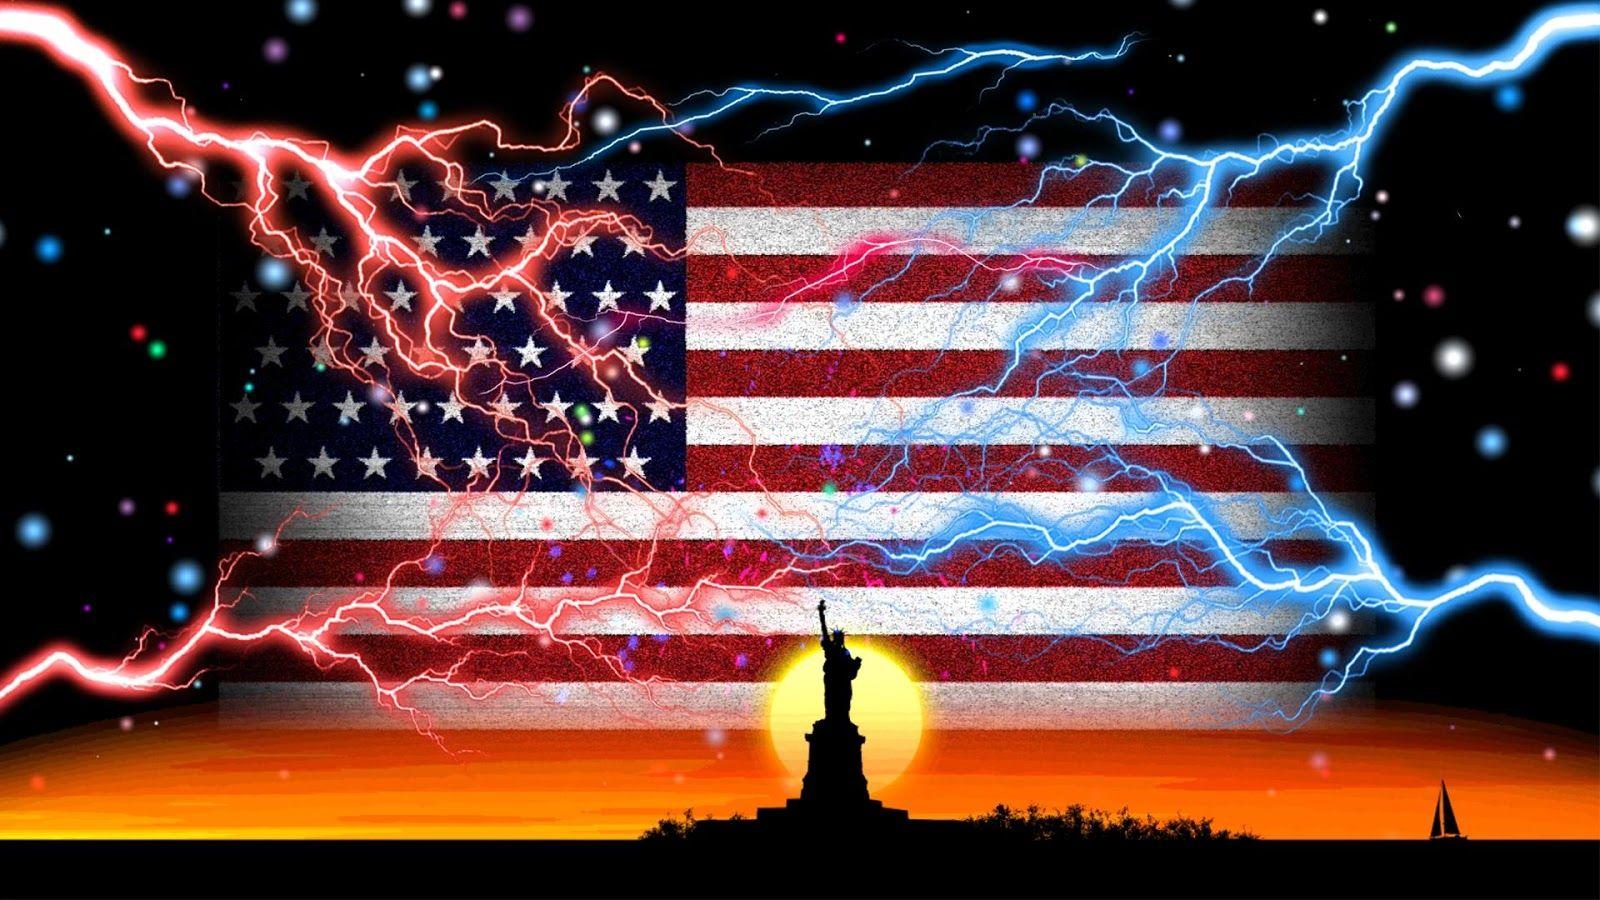 Live Wallpaper USA Flag- screenshot. ReD wHiTe & bLuE